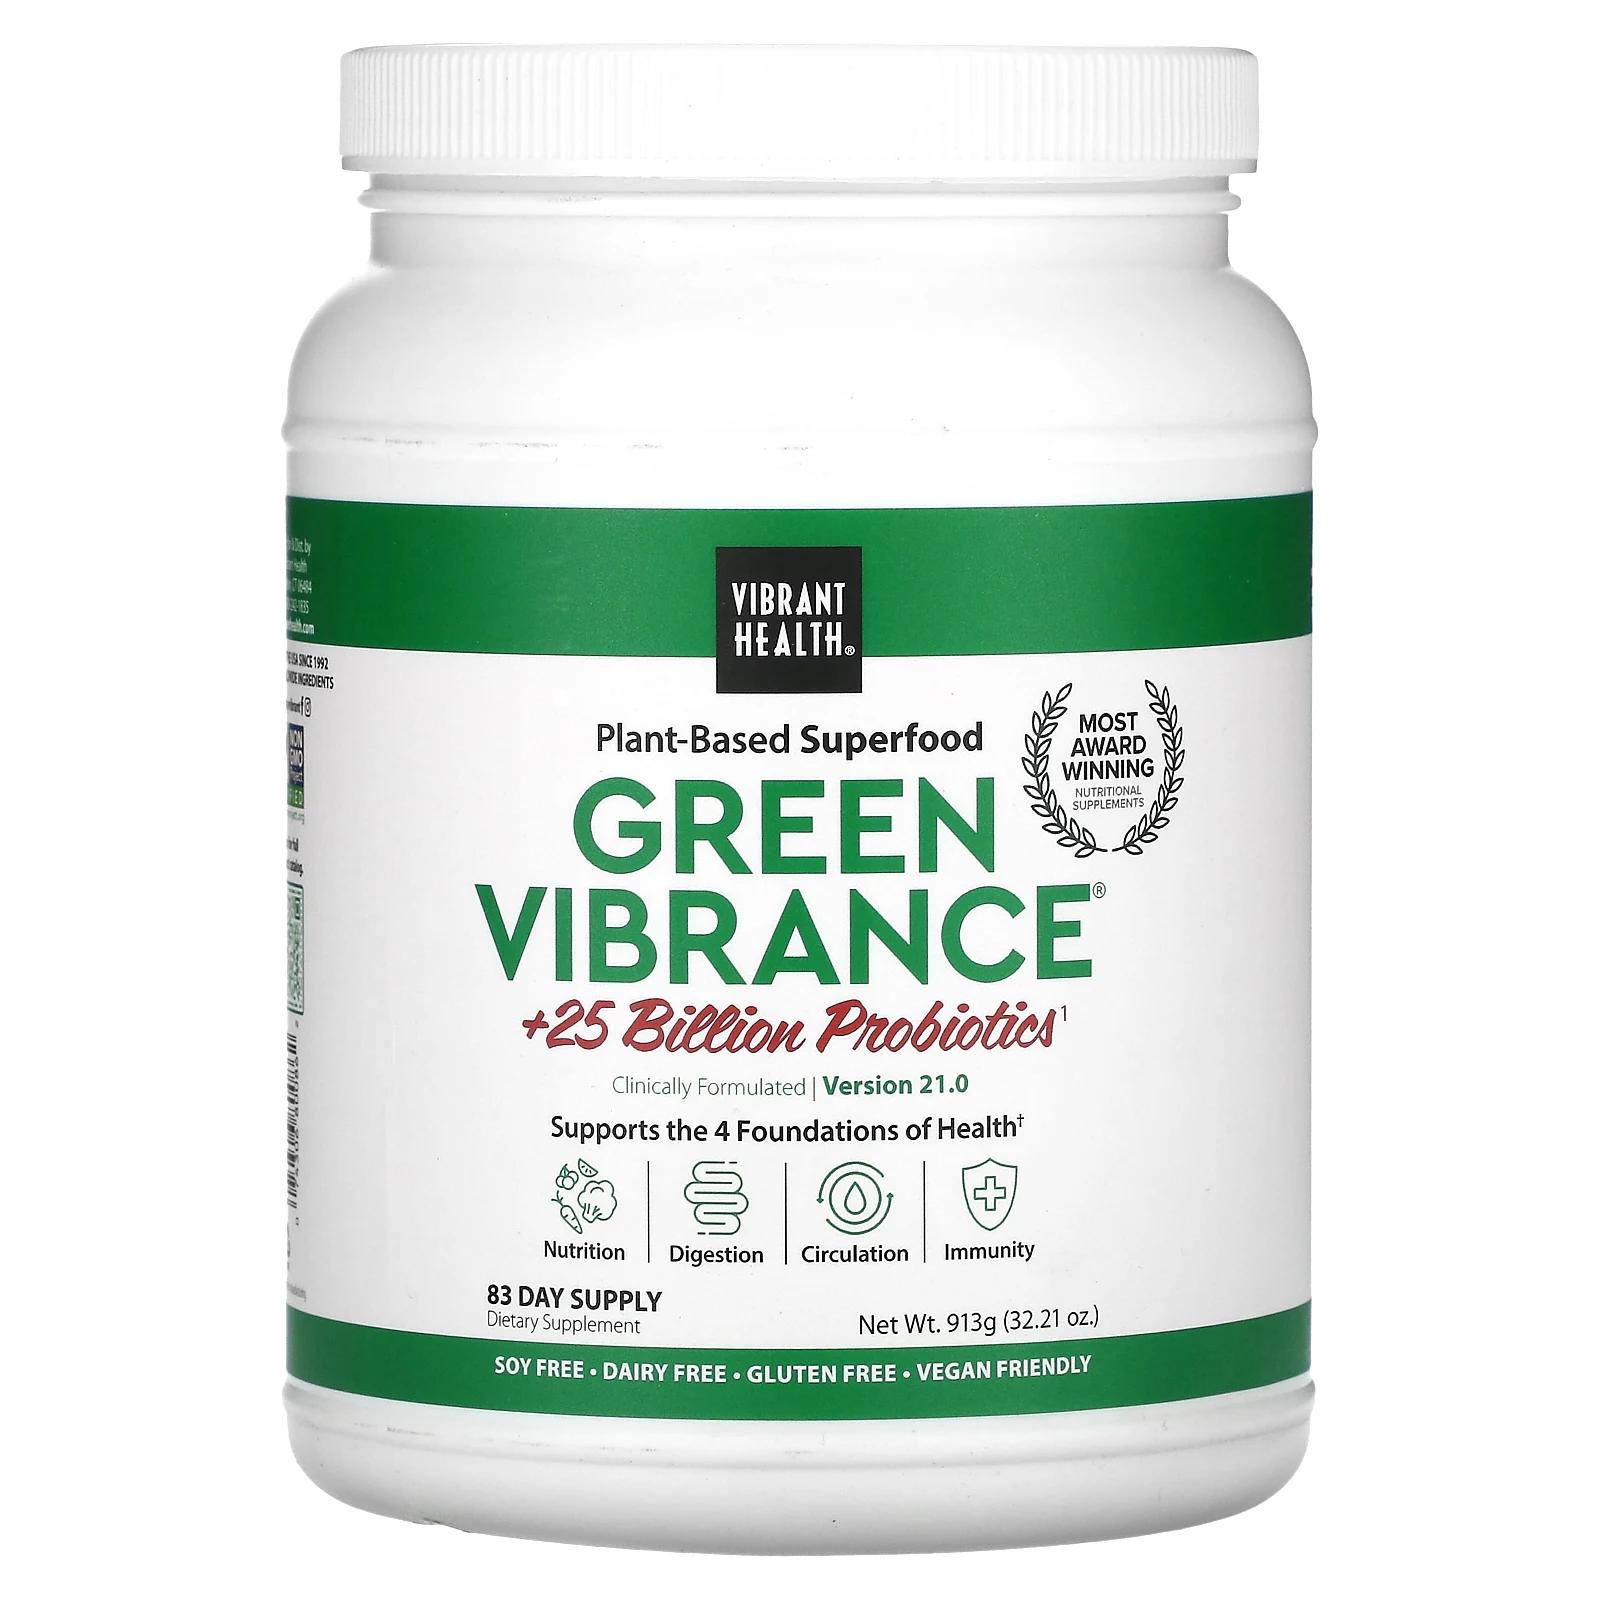 Vibrant Health Green Vibrance +25 млрд пробиотиков версия 17.0 35,27 унц. (1 кг) vibrant health green vibrance 25 млрд пробиотиков версия 18 0 913 г 32 21 унции